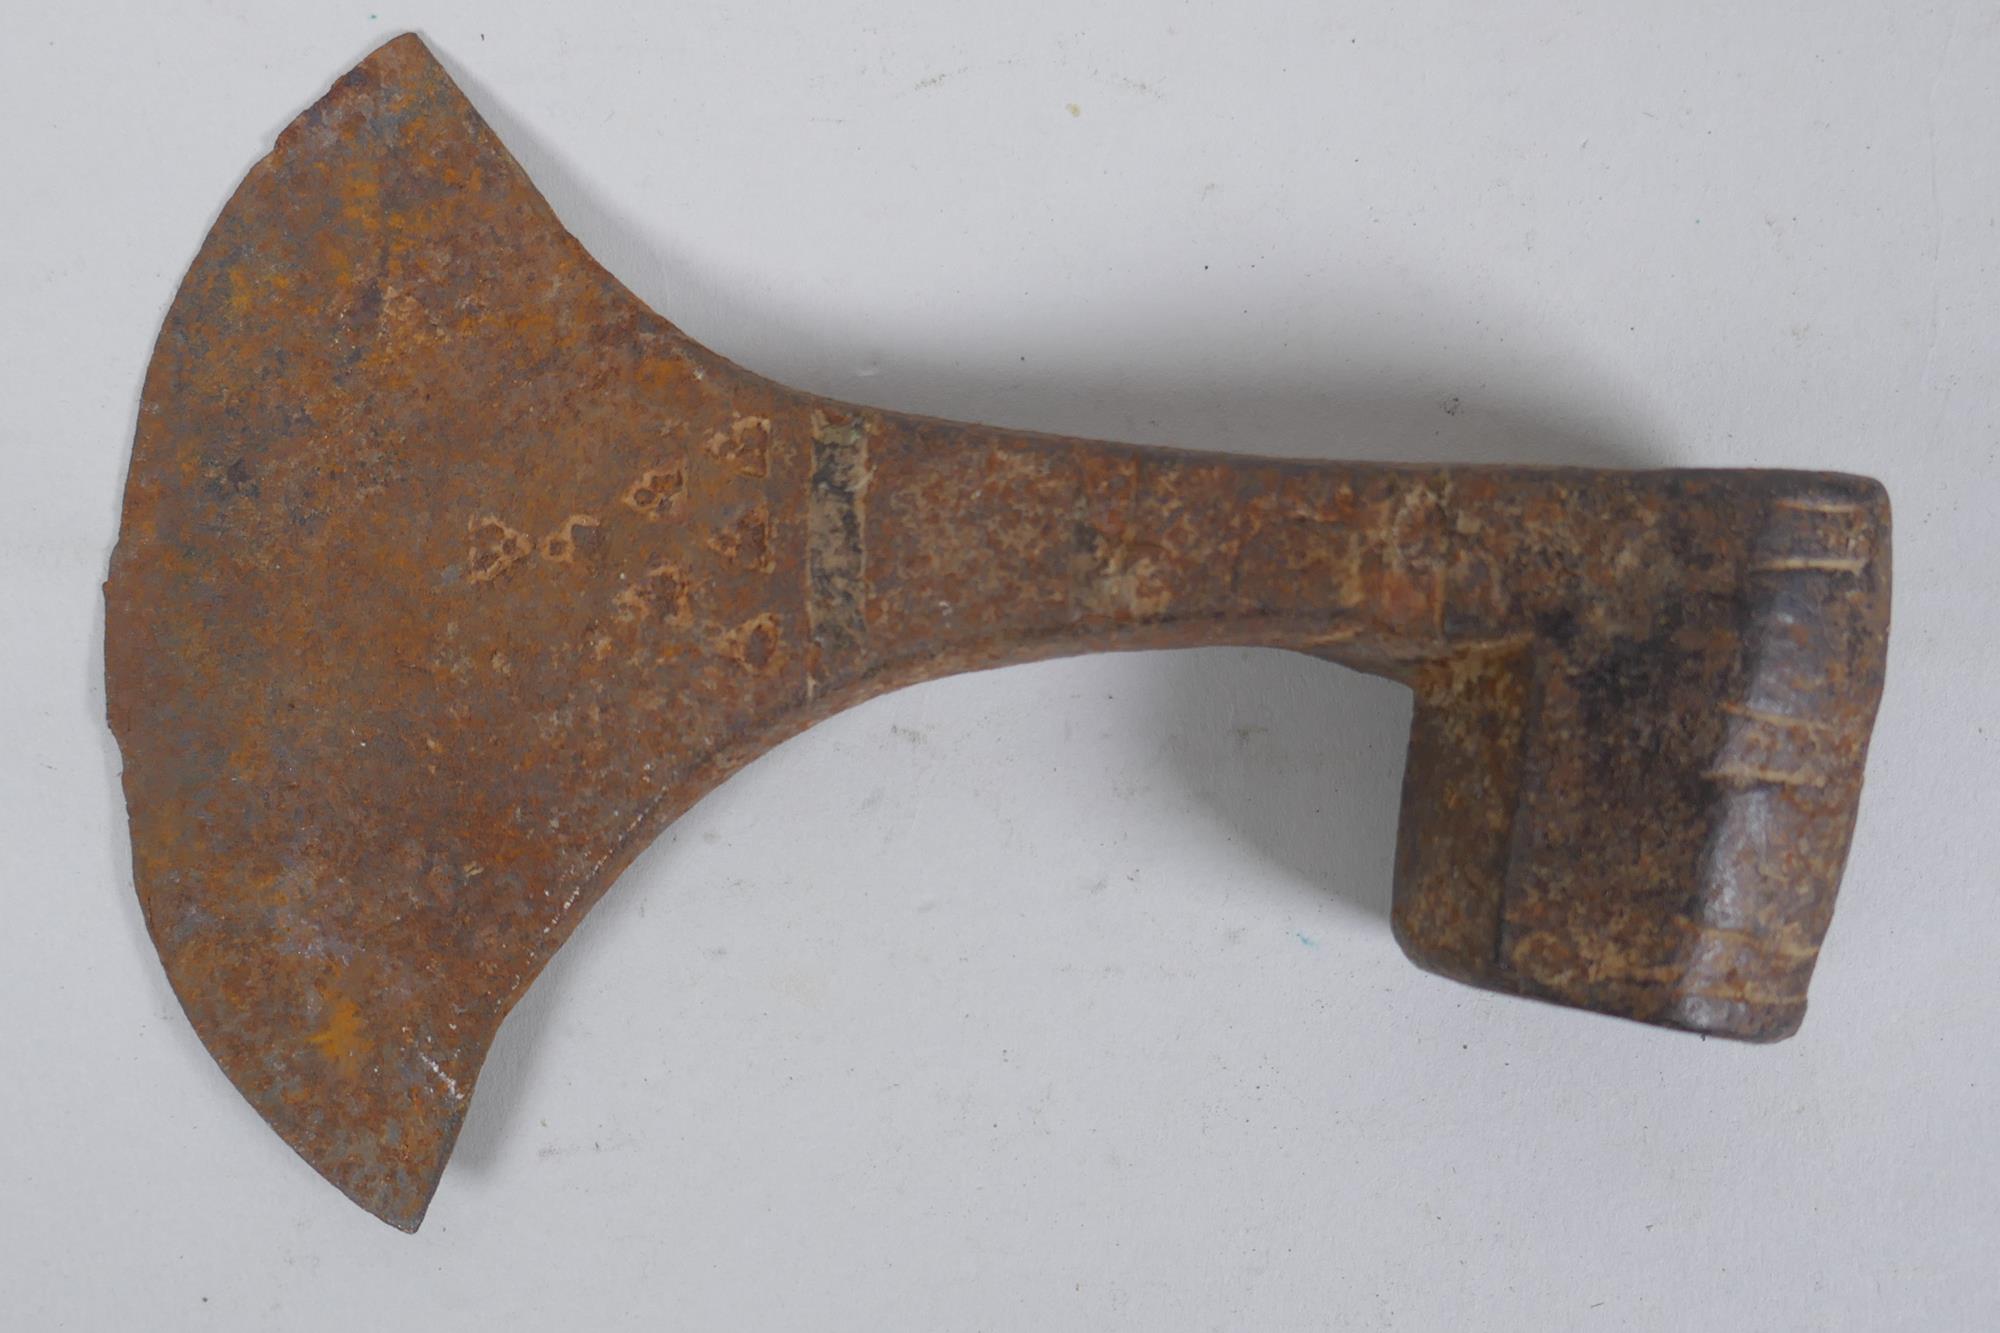 An early European horseman's axe head, possibly C14th, 16 x 11cm